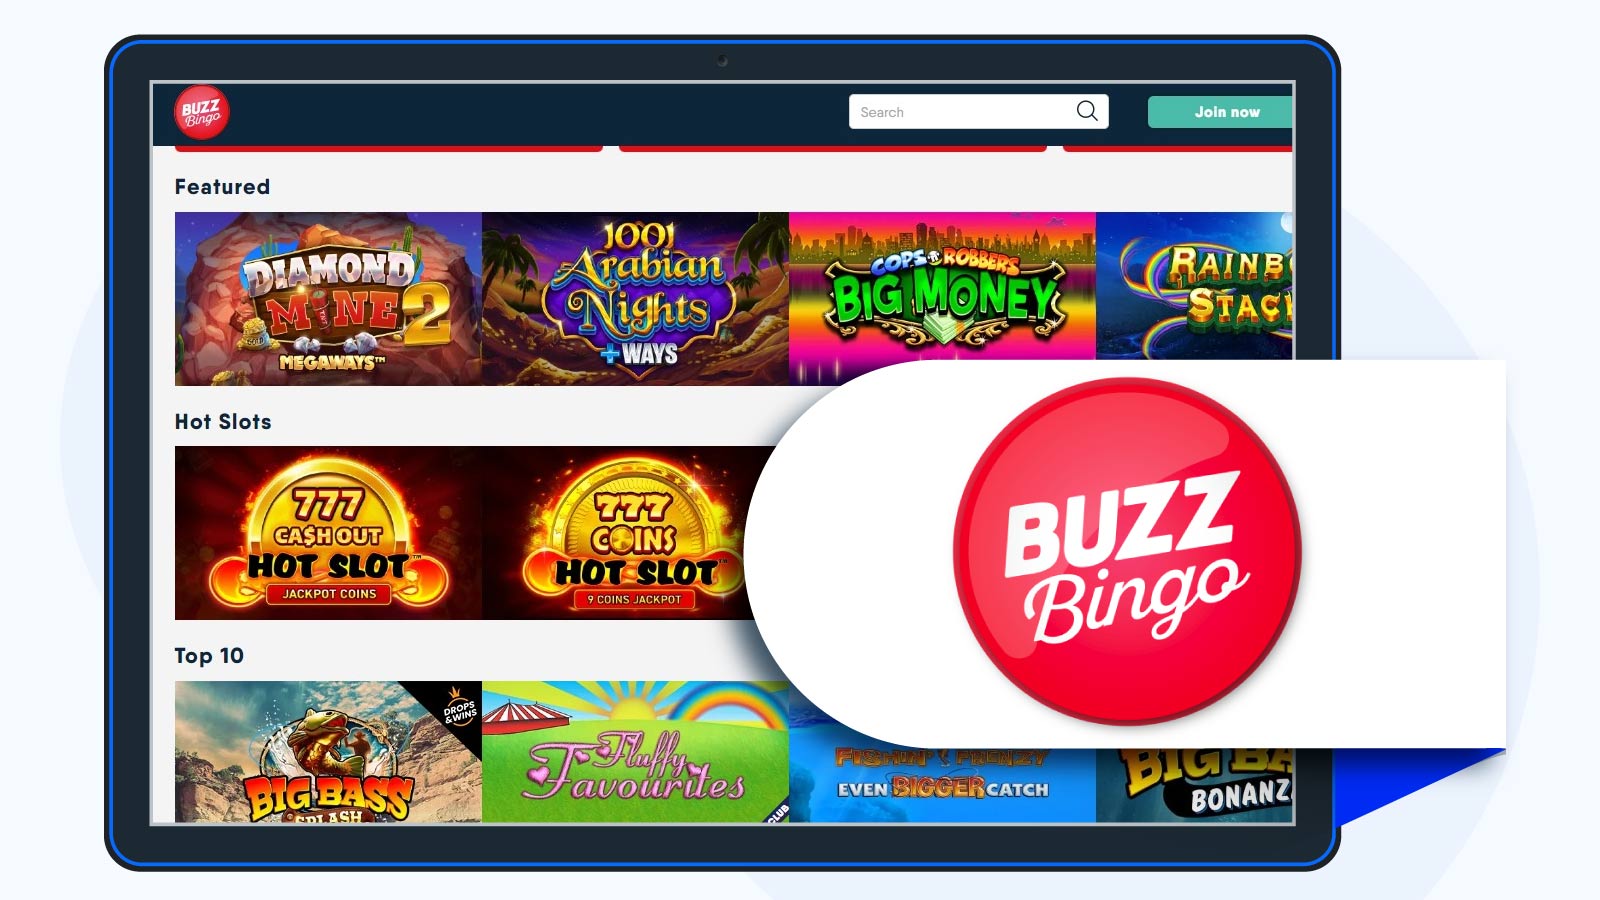 Buzz Bingo Casino – Best Playtech Casino for Live Games